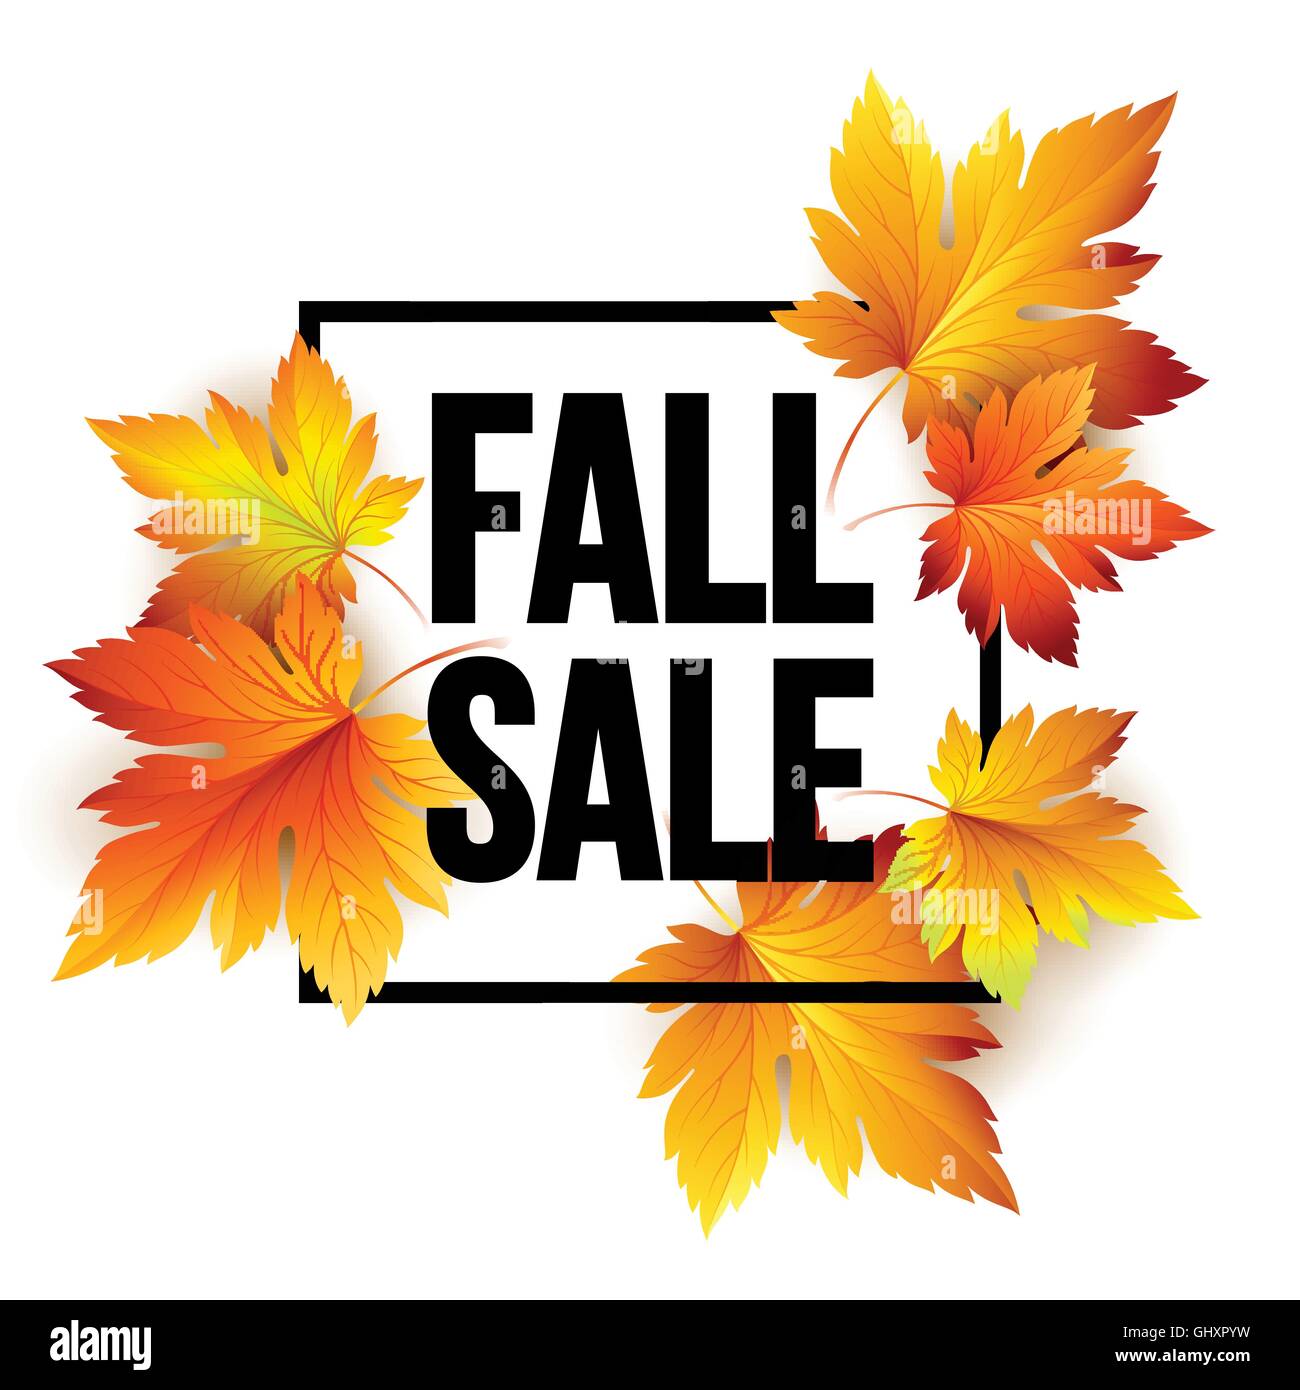 Autumn seasonal sale banner design. Fal leaf. Vector illustration Stock Vector